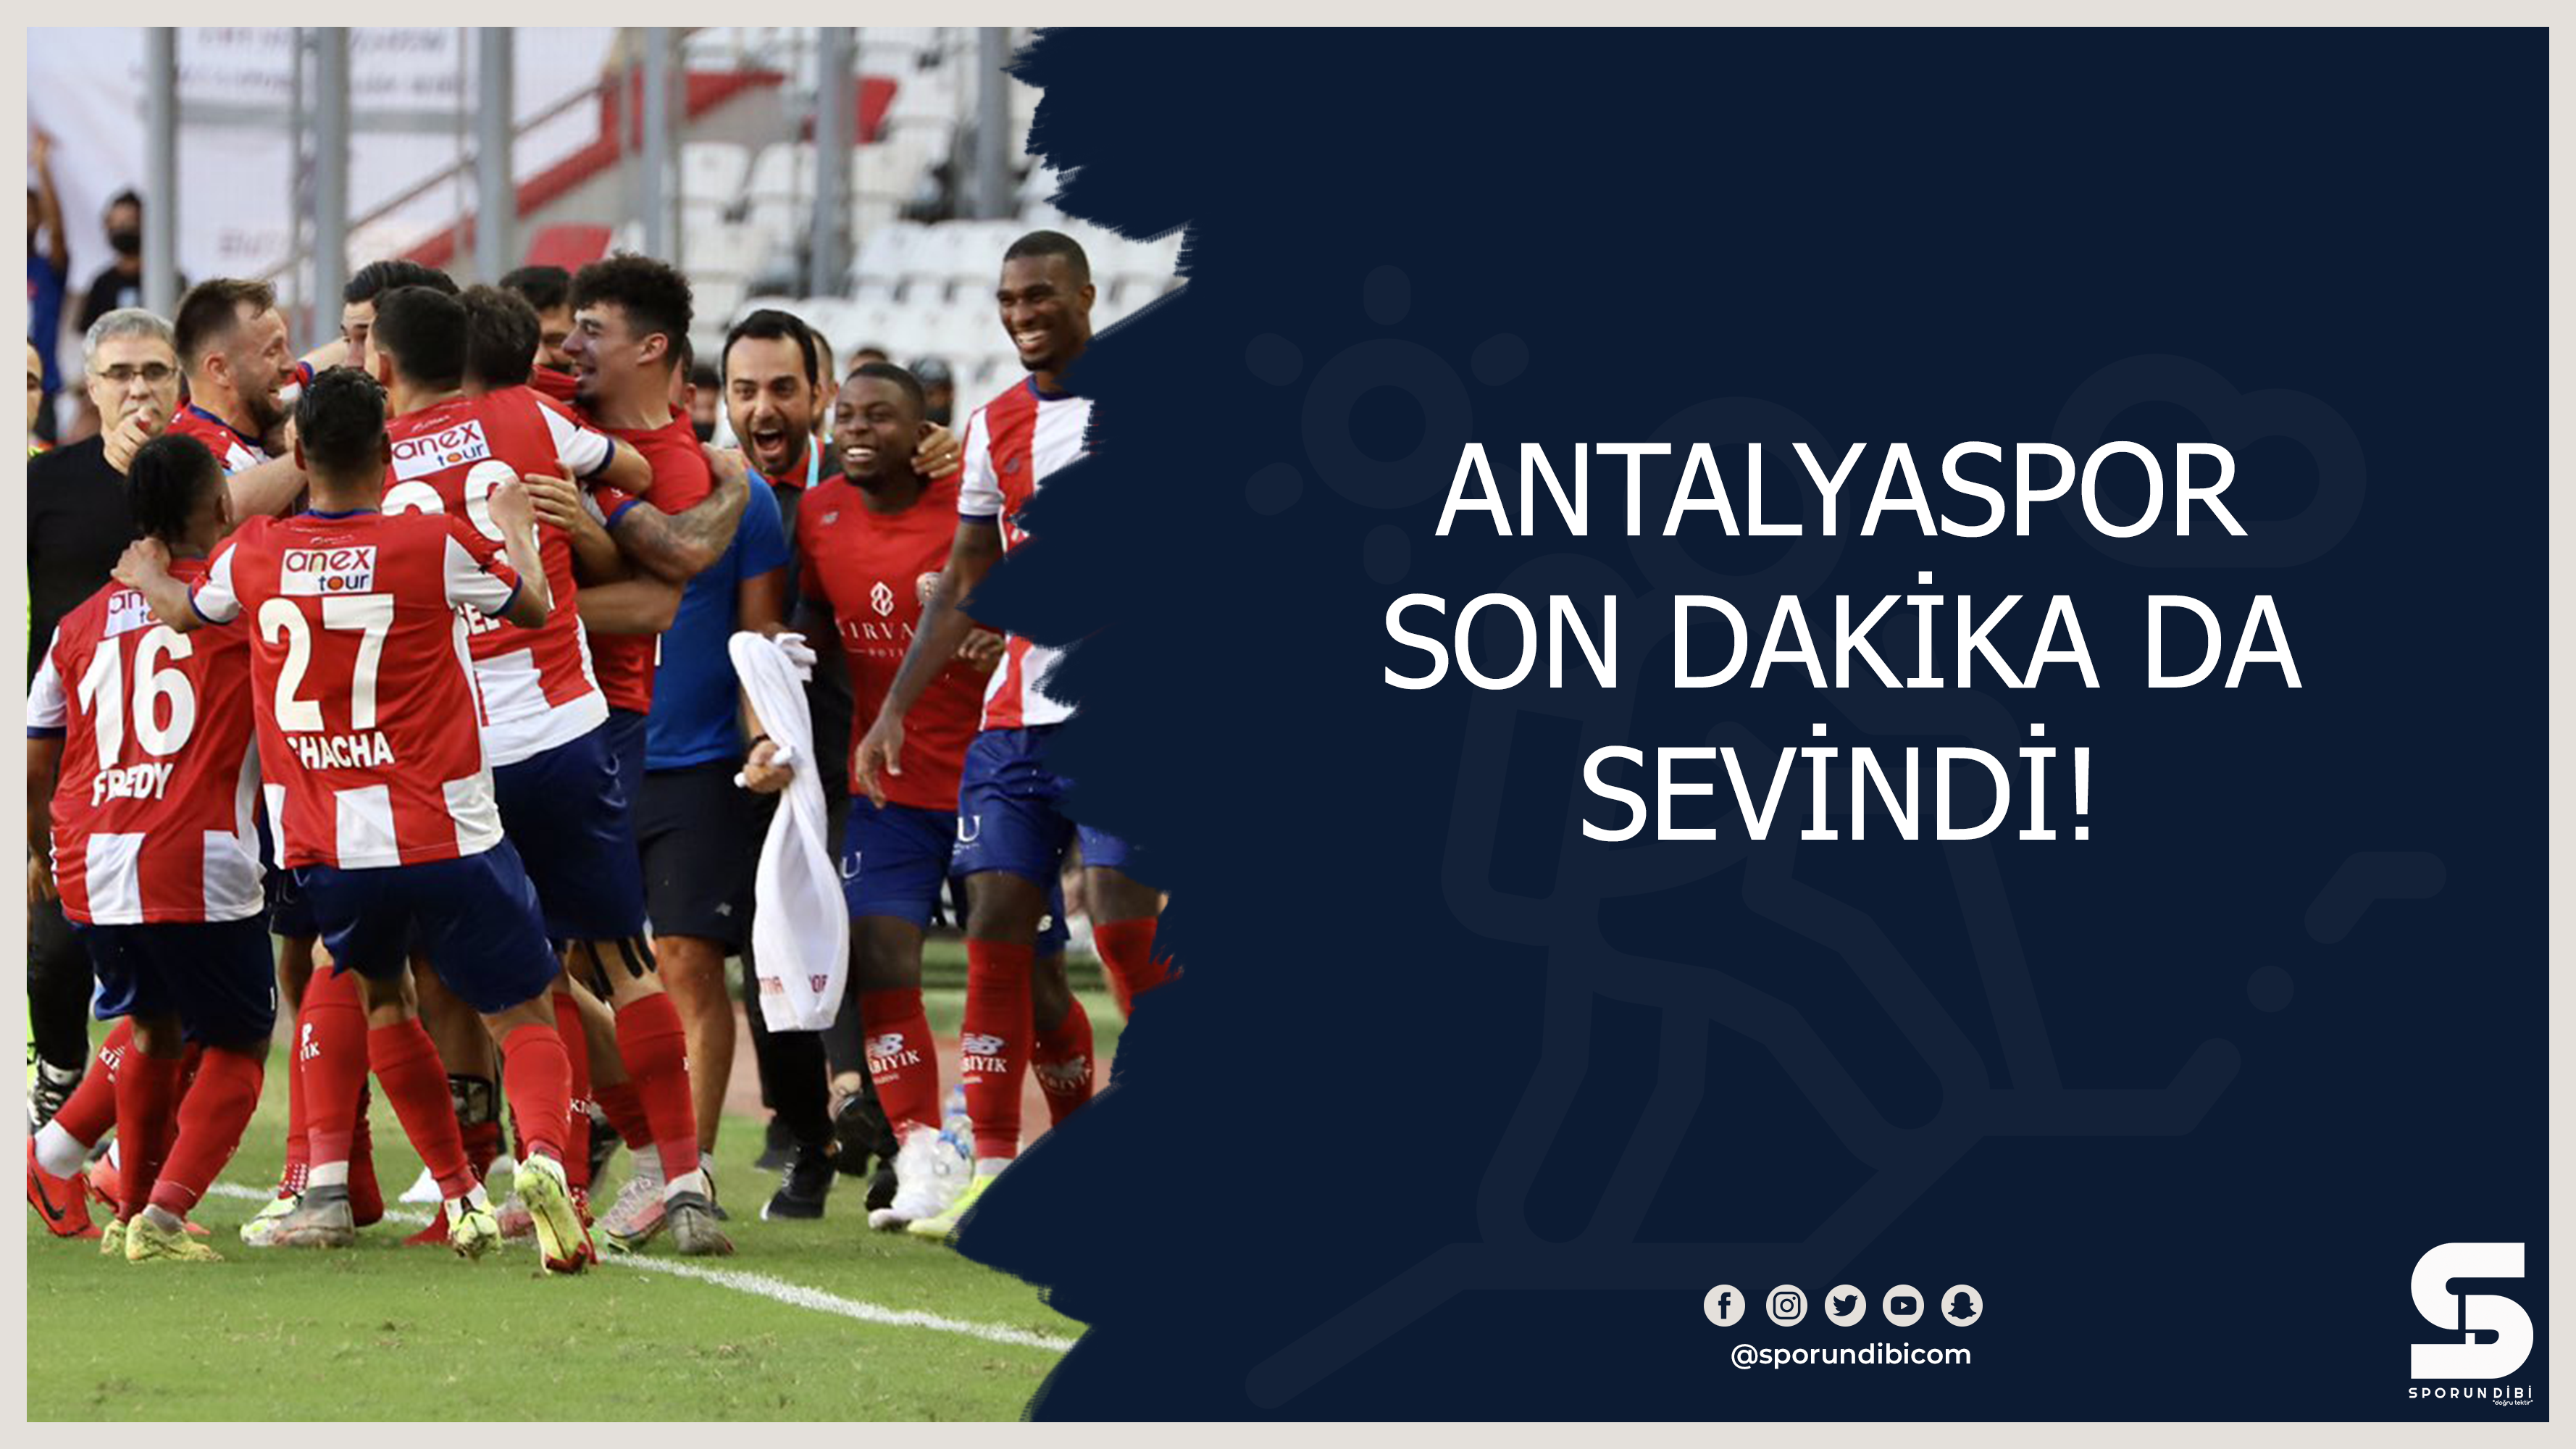 Antalyaspor son dakika da sevindi!